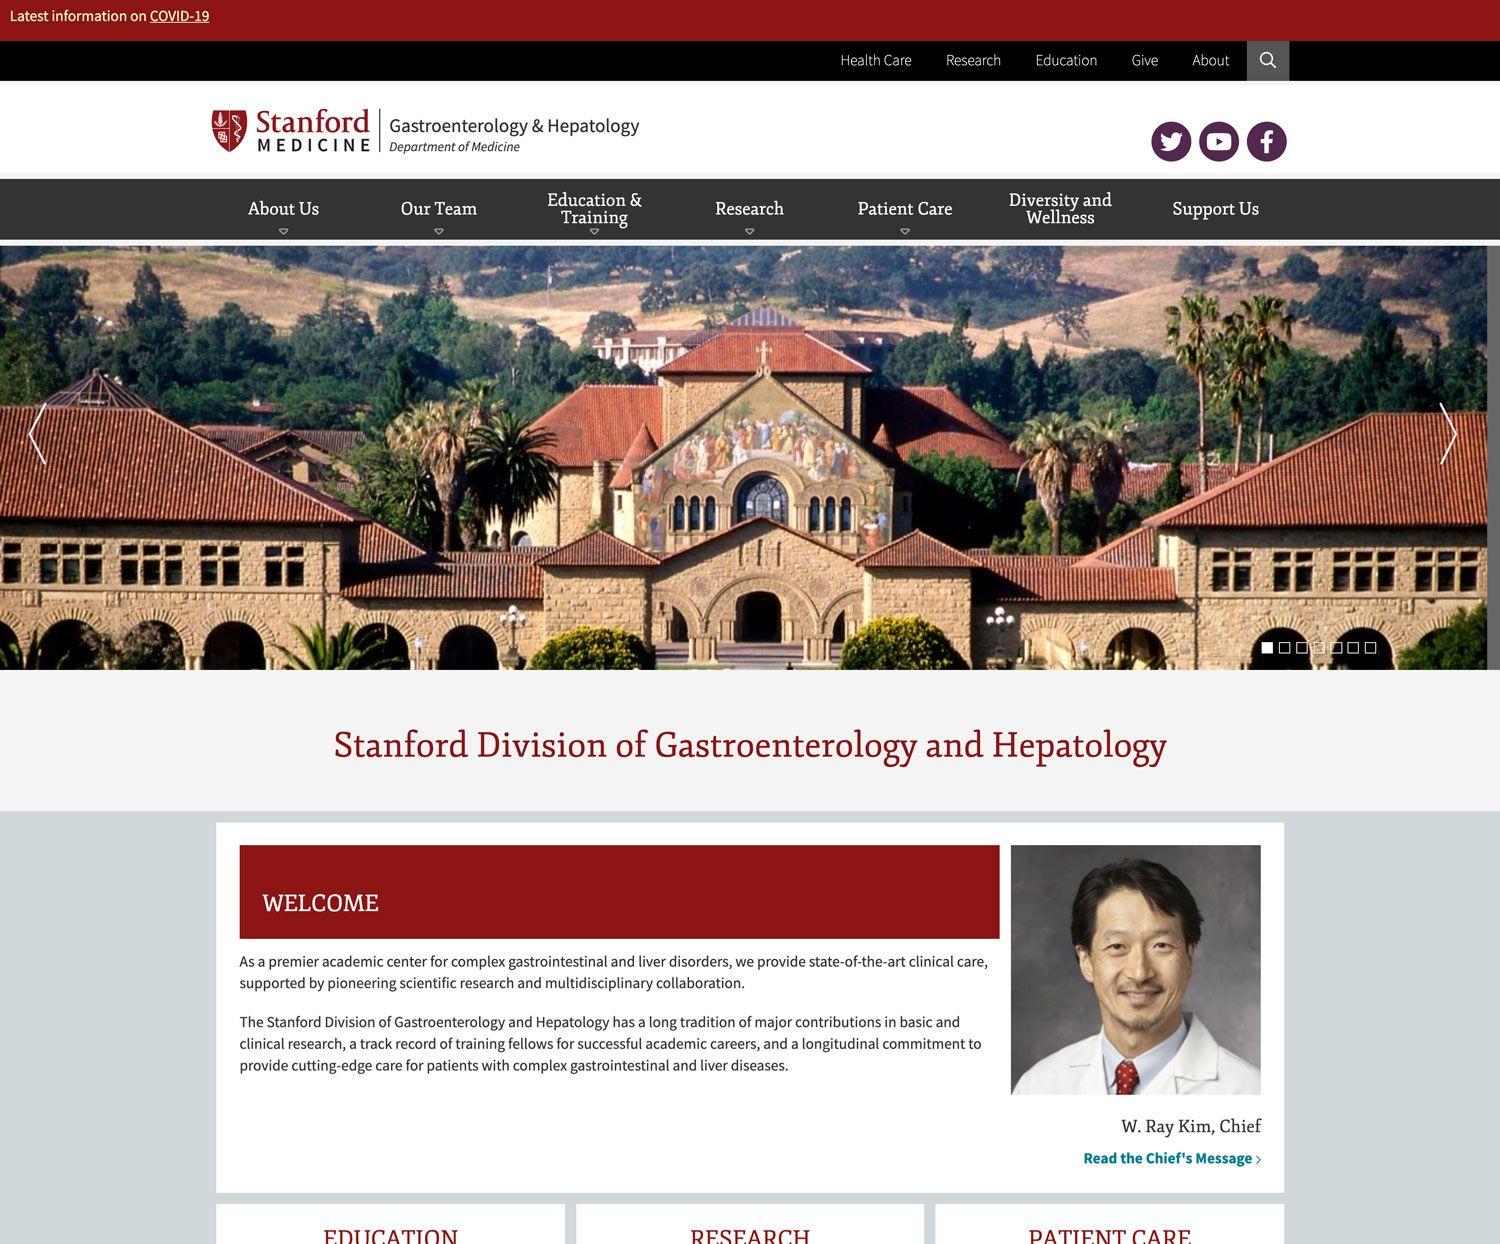 Gastroenterology & Hepatology Department at Stanford University